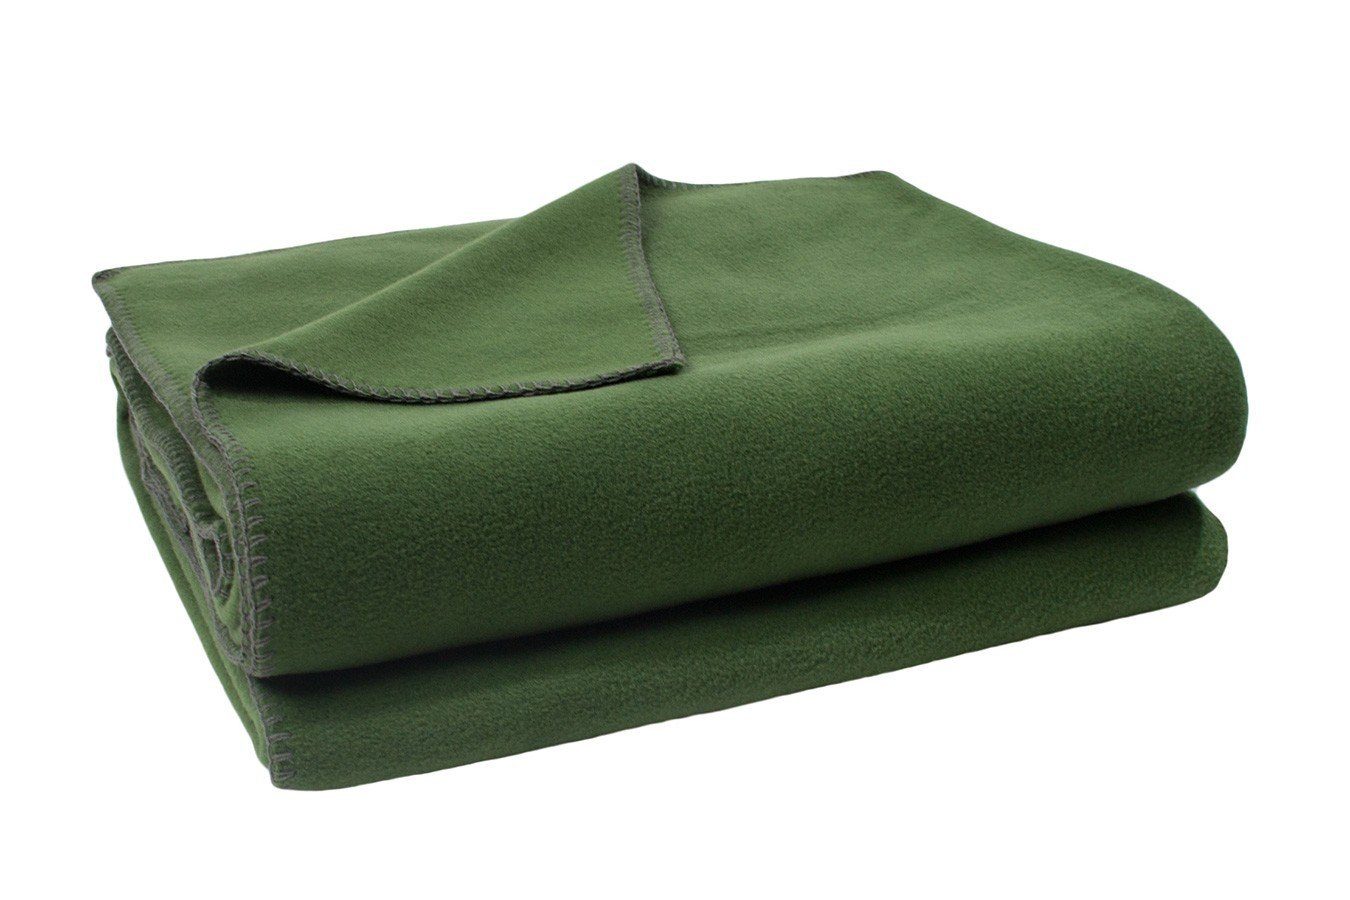 150 cm Wohndecke Soft-Fleece Decke 110 daslagerhaus x dunkeljadegrün, living